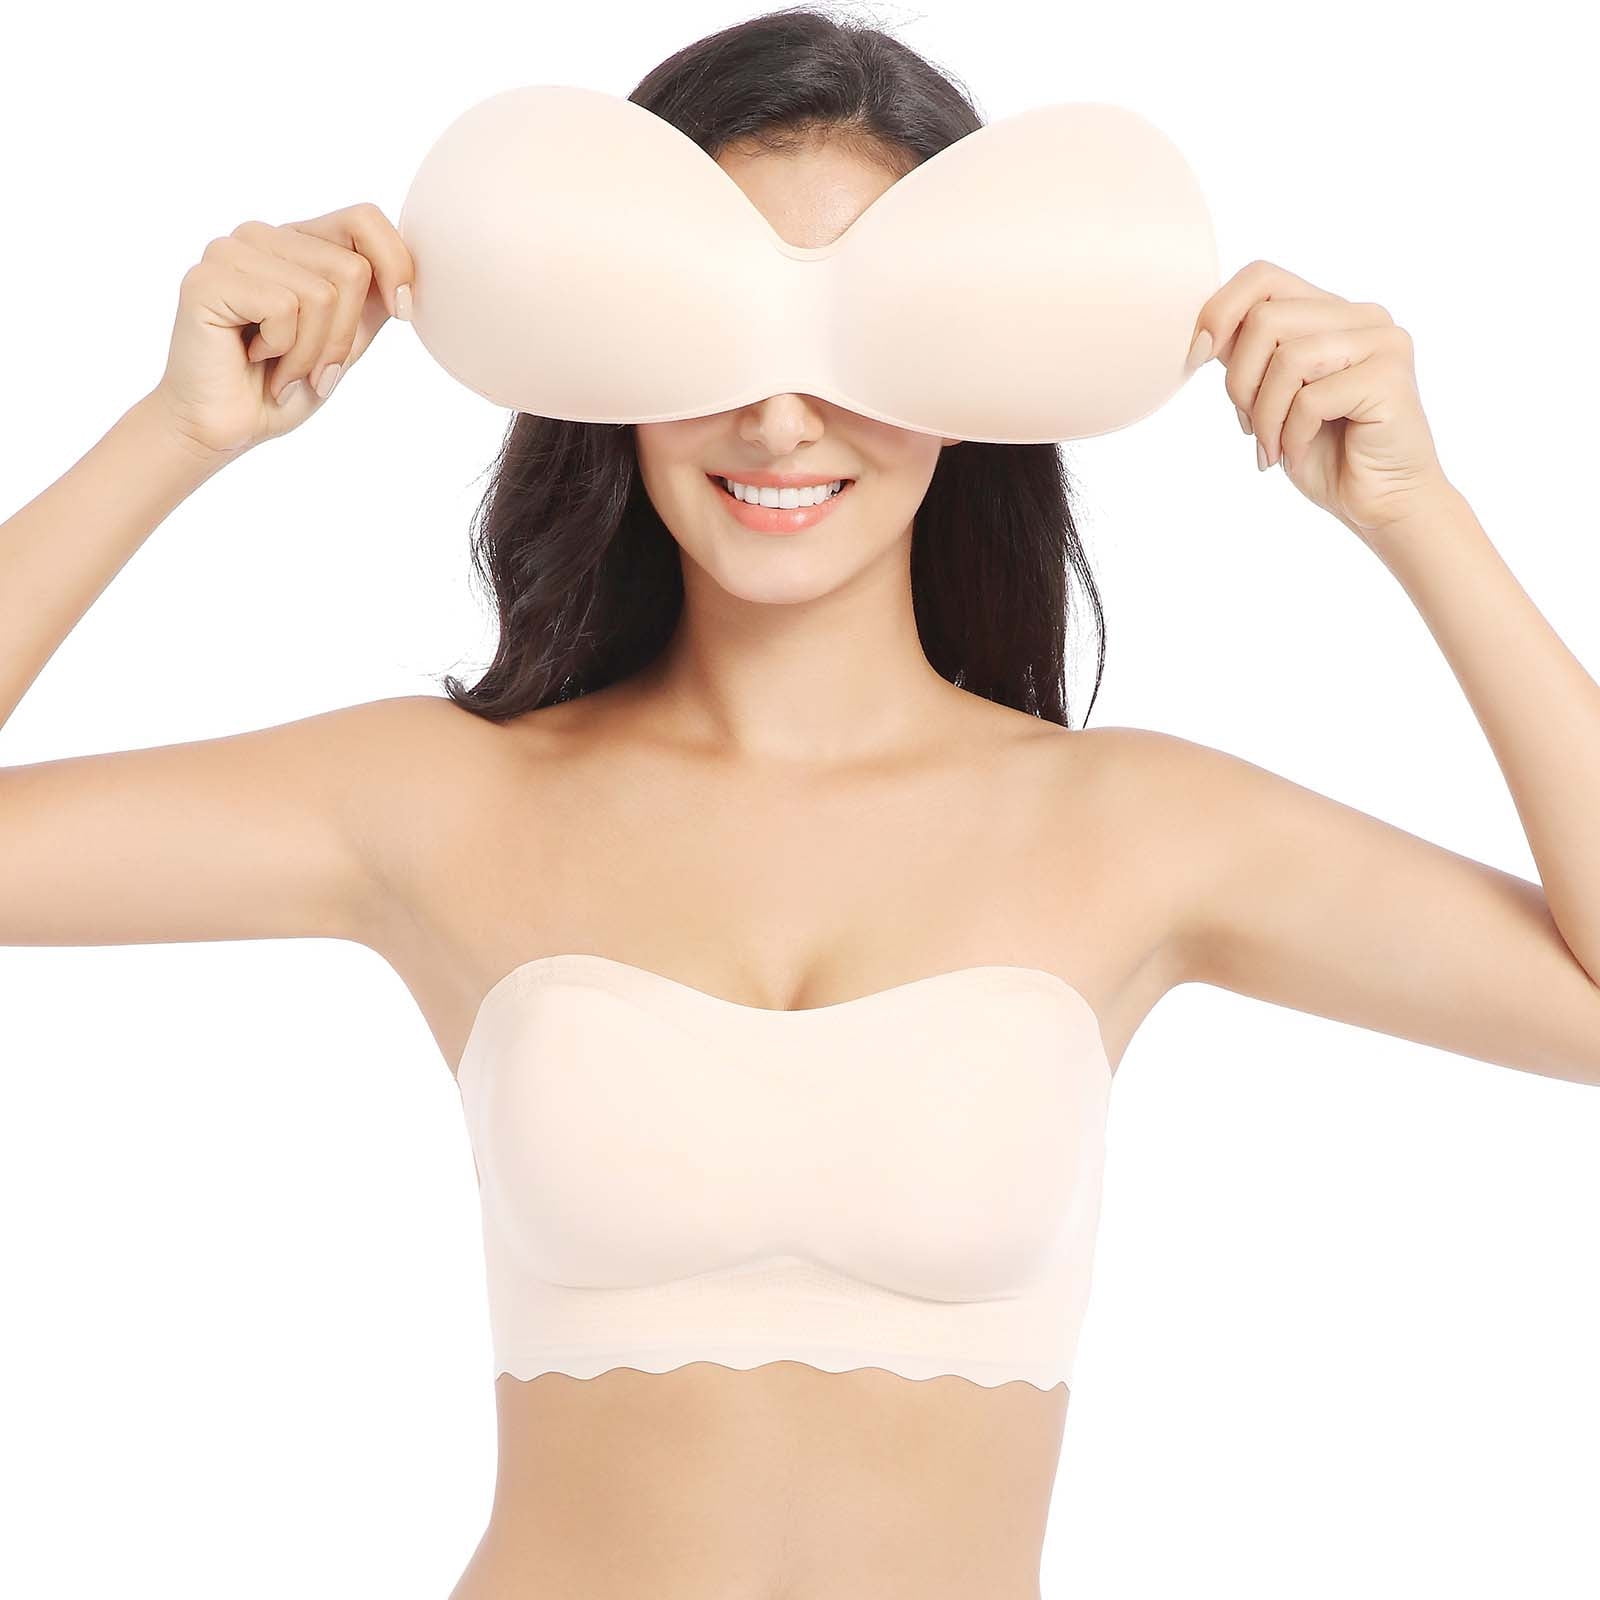 FAFWYP Plus Size Strapless Bras for Women,Sexy Push Up Wireless